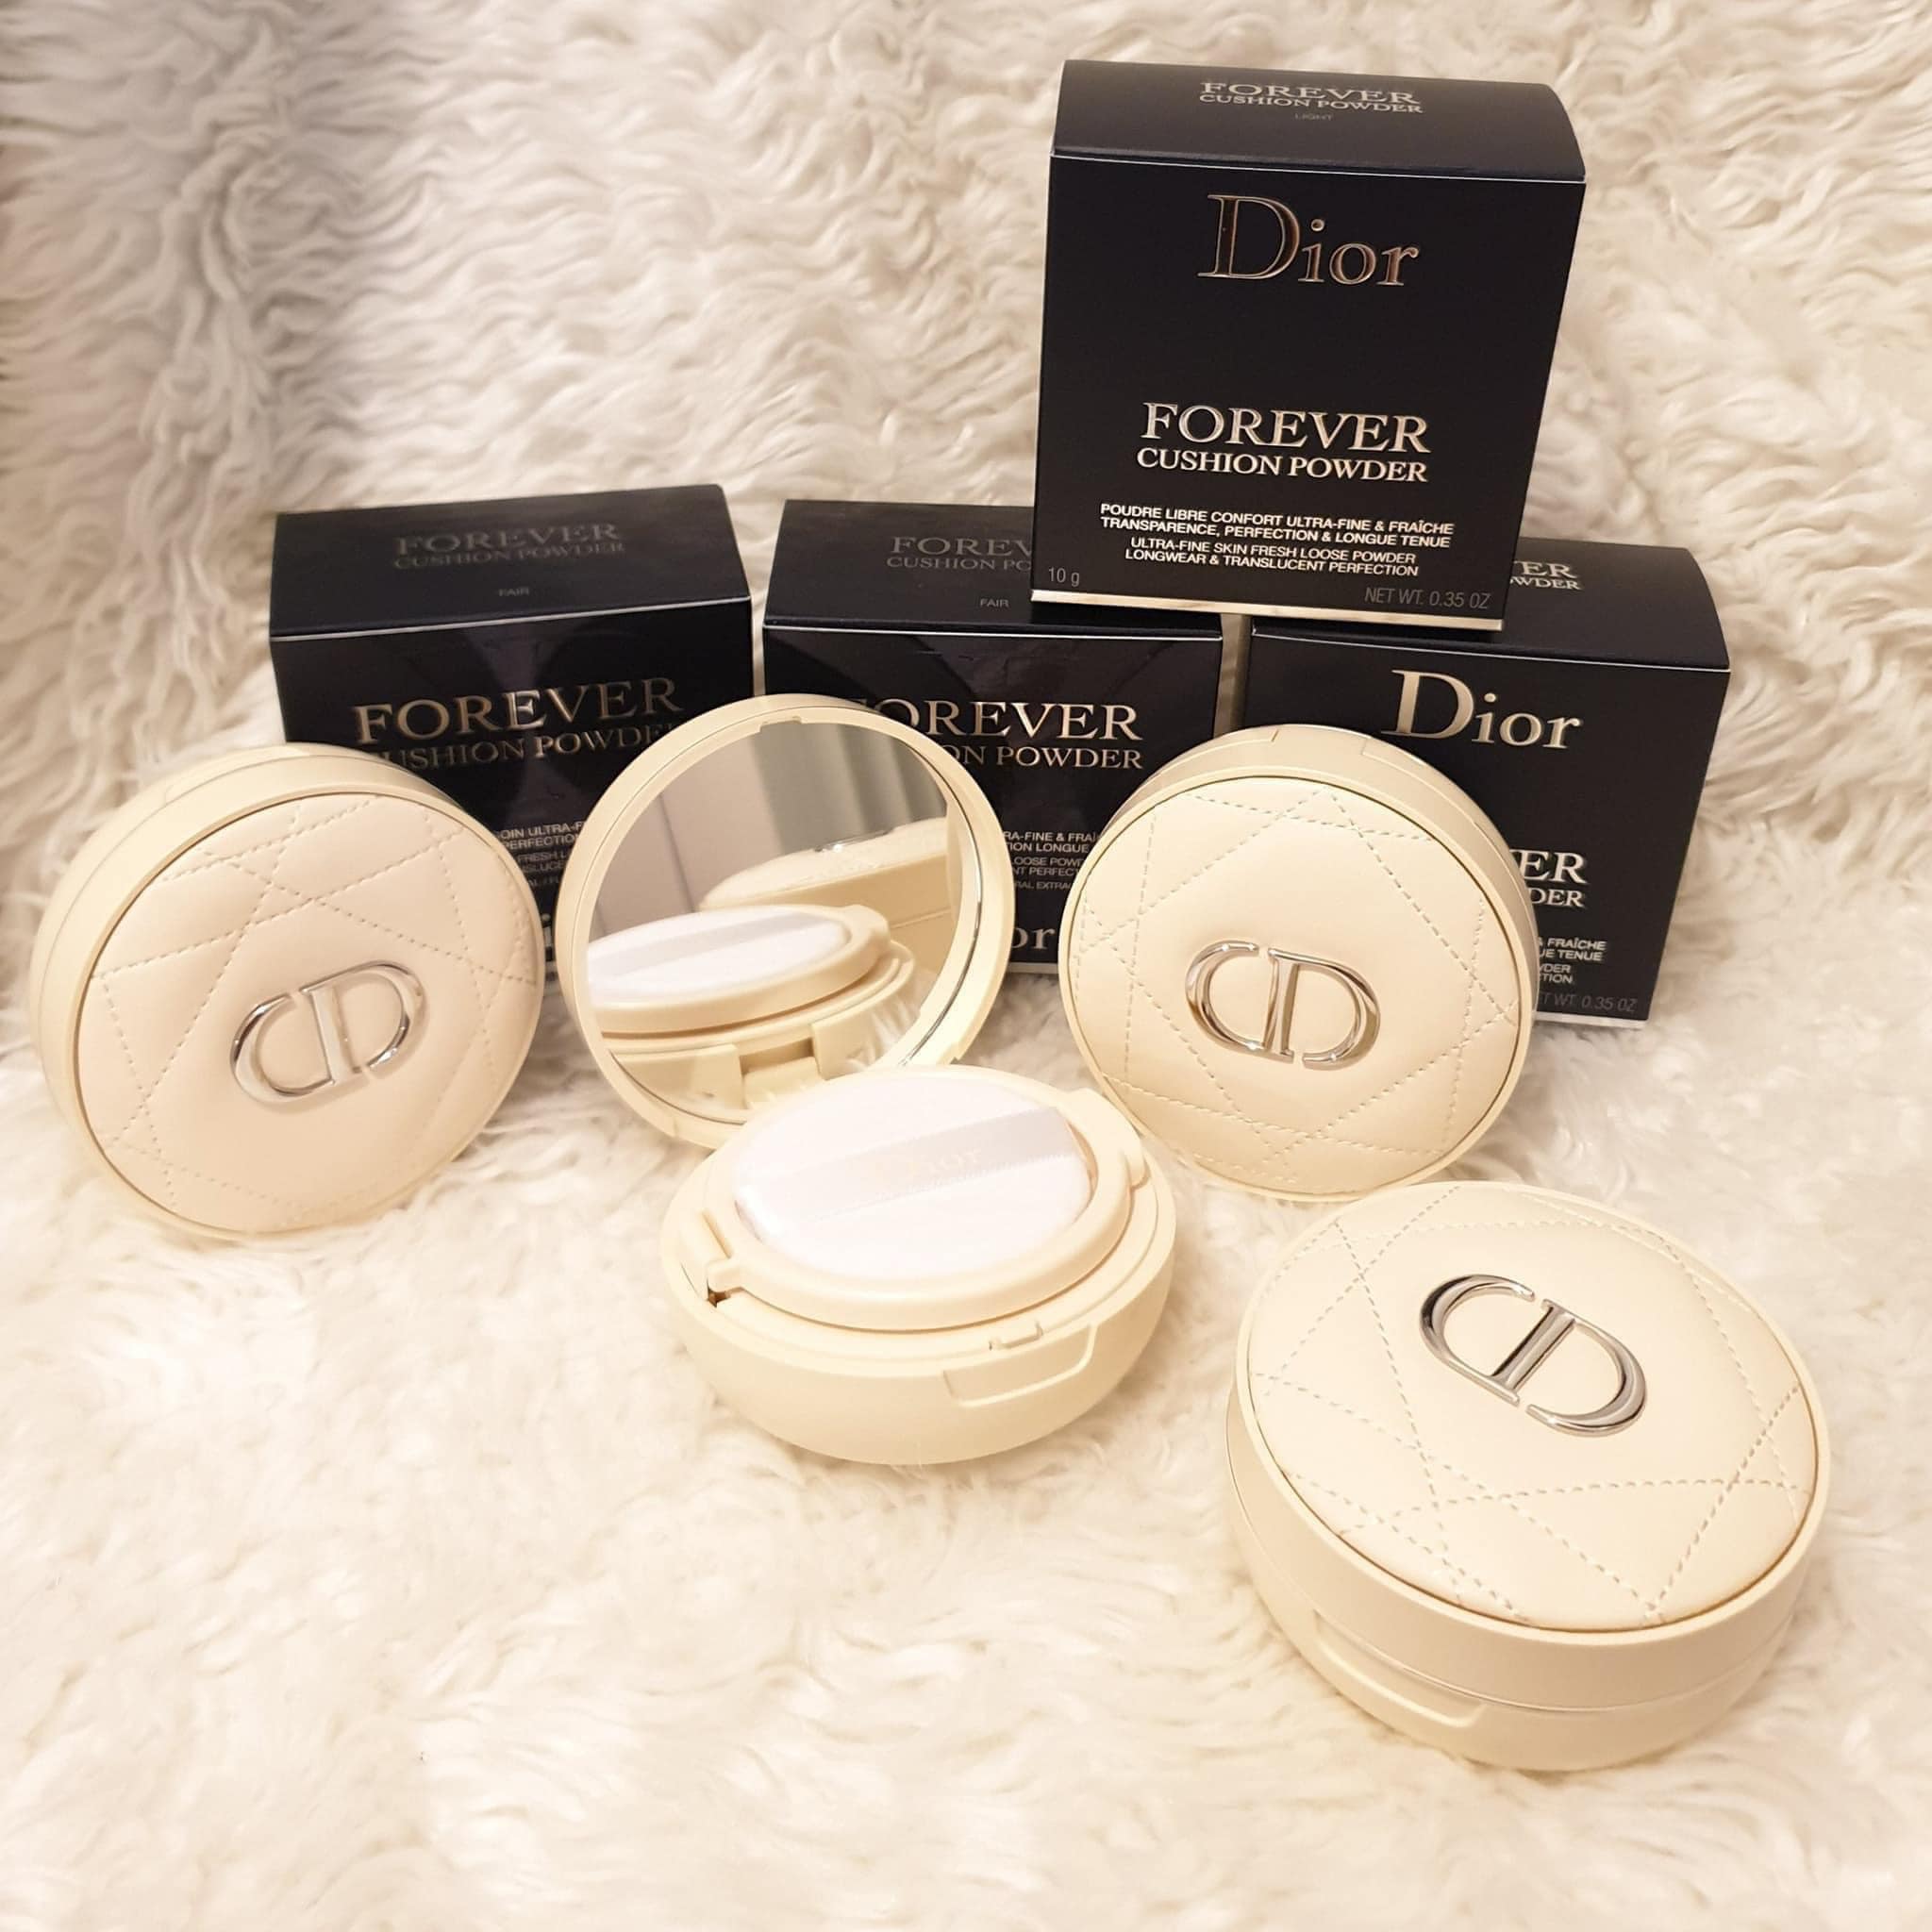 Dior  Best seller shade Forever Cushion Powder   Gallery posted by  Geeeyaa  Lemon8